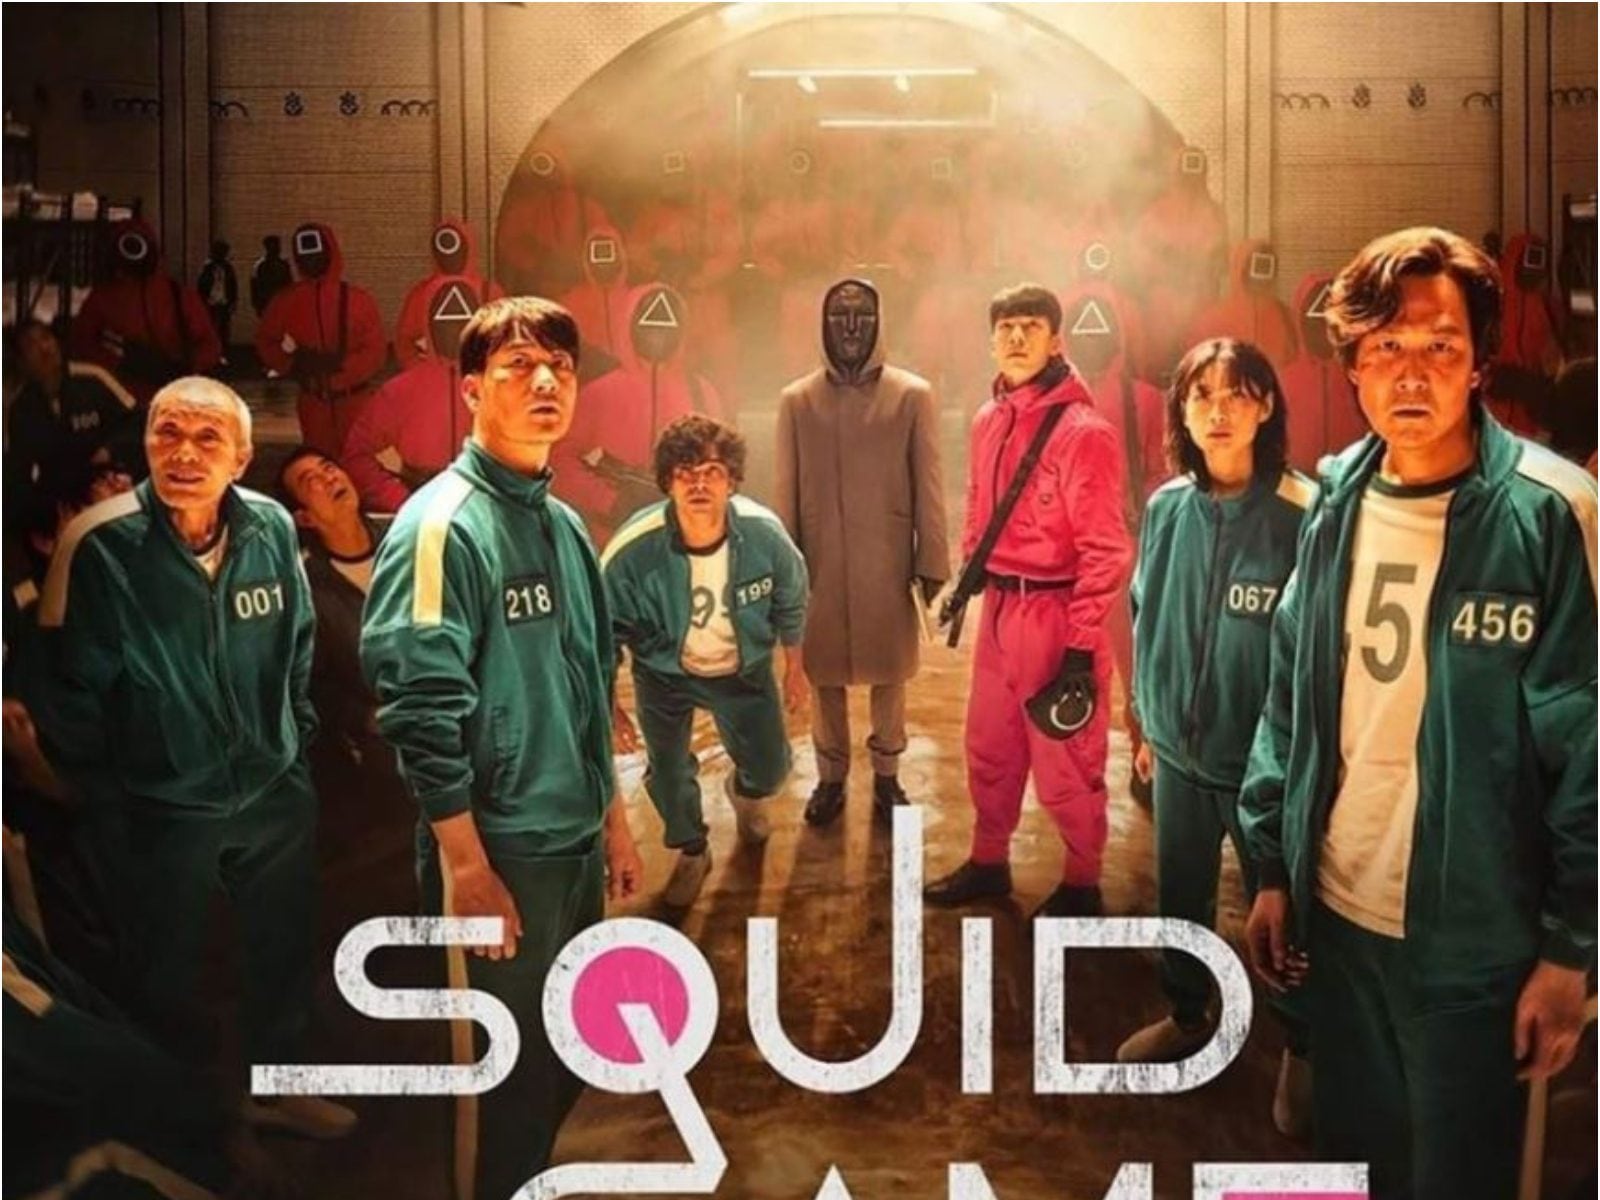 Korean Survivalist Drama 'Squid Game' on Track to be Biggest Netflix Show, Beating Bridgerton